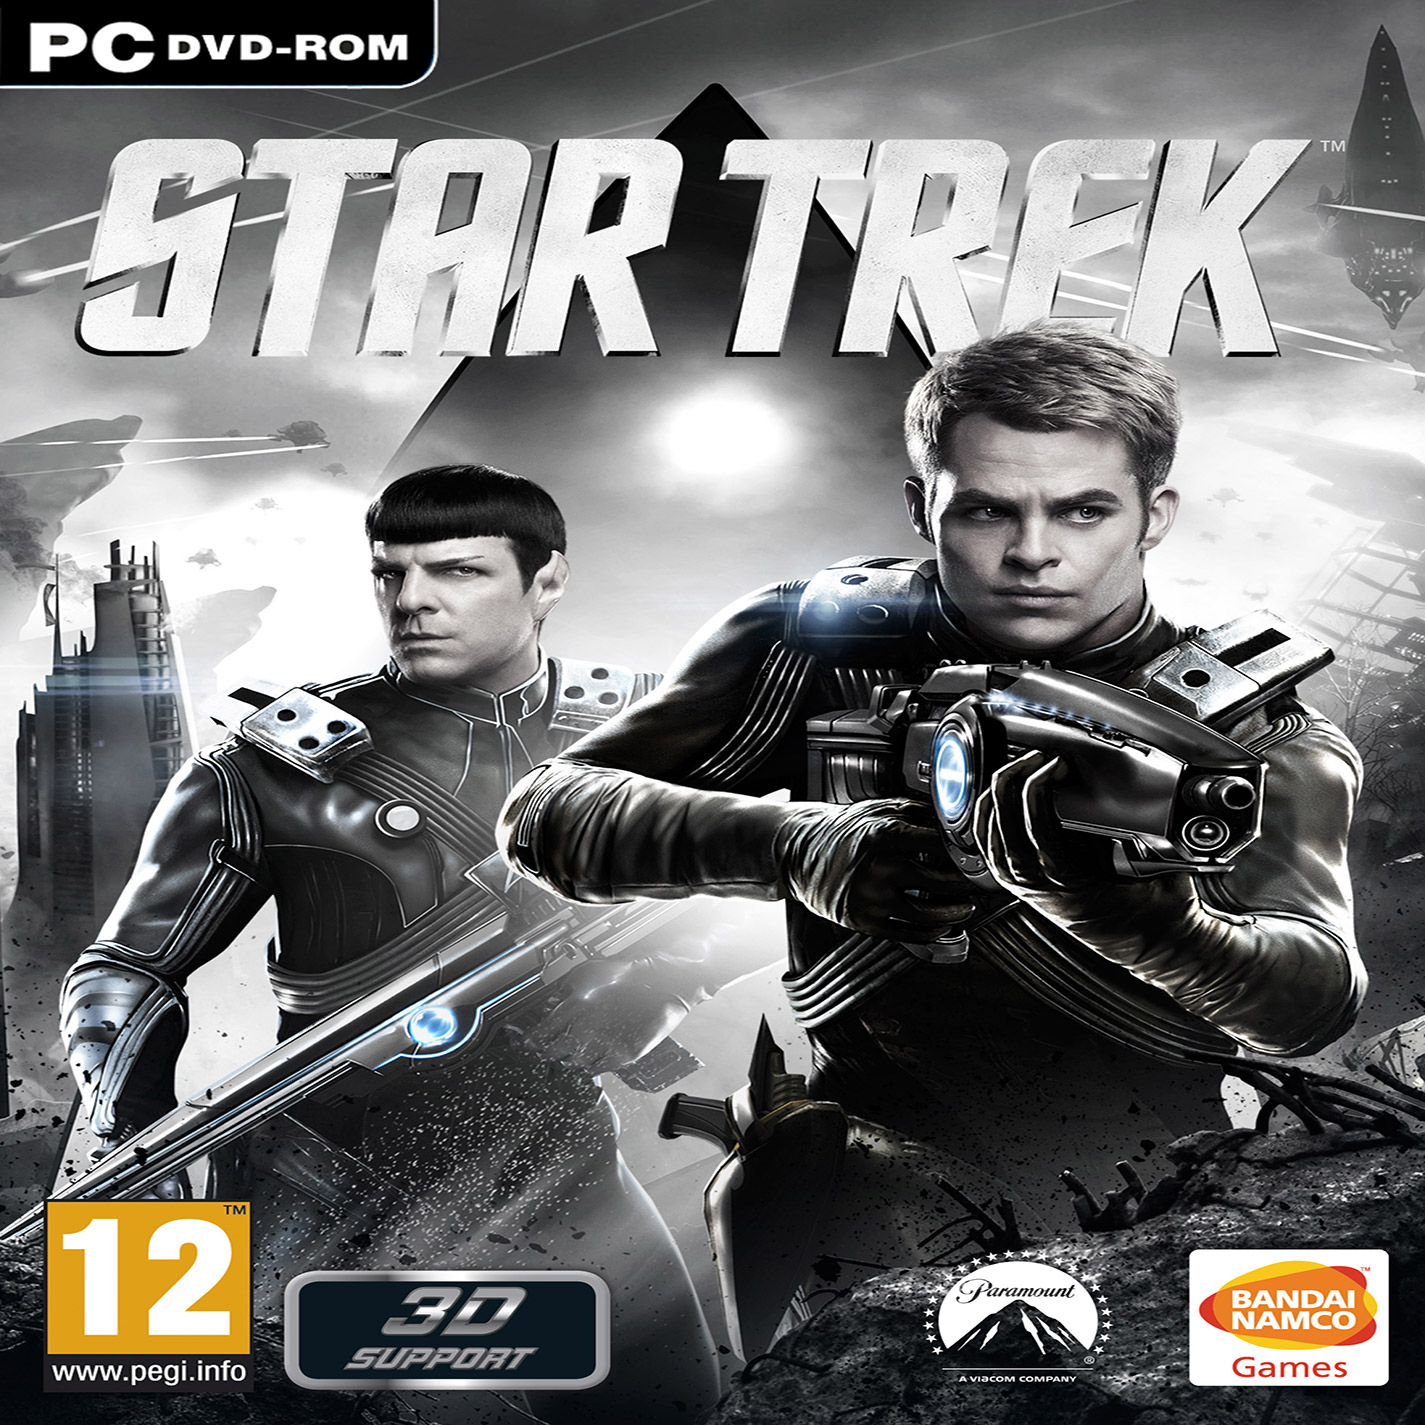 Star Trek: The Video Game - predn CD obal